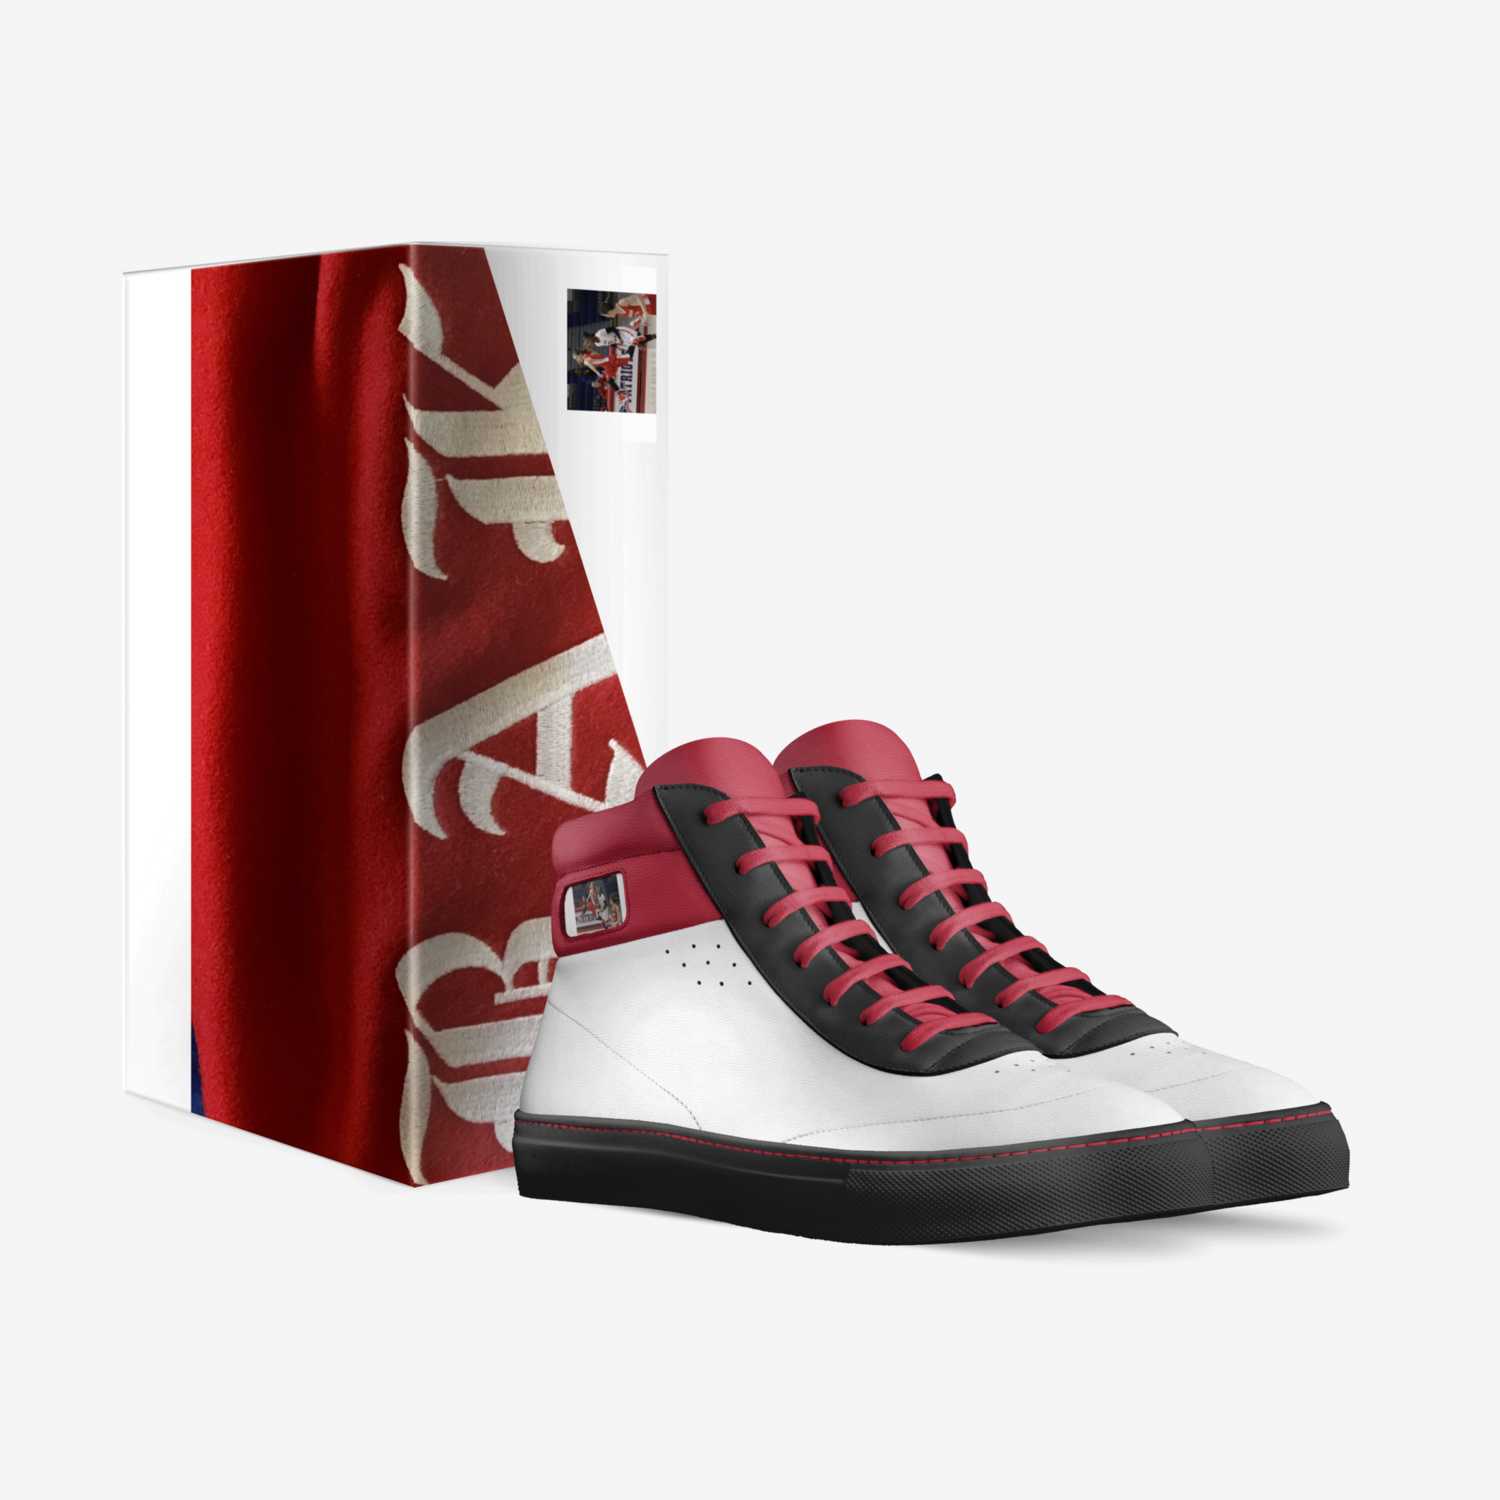 EB custom made in Italy shoes by Eva Bak | Box view